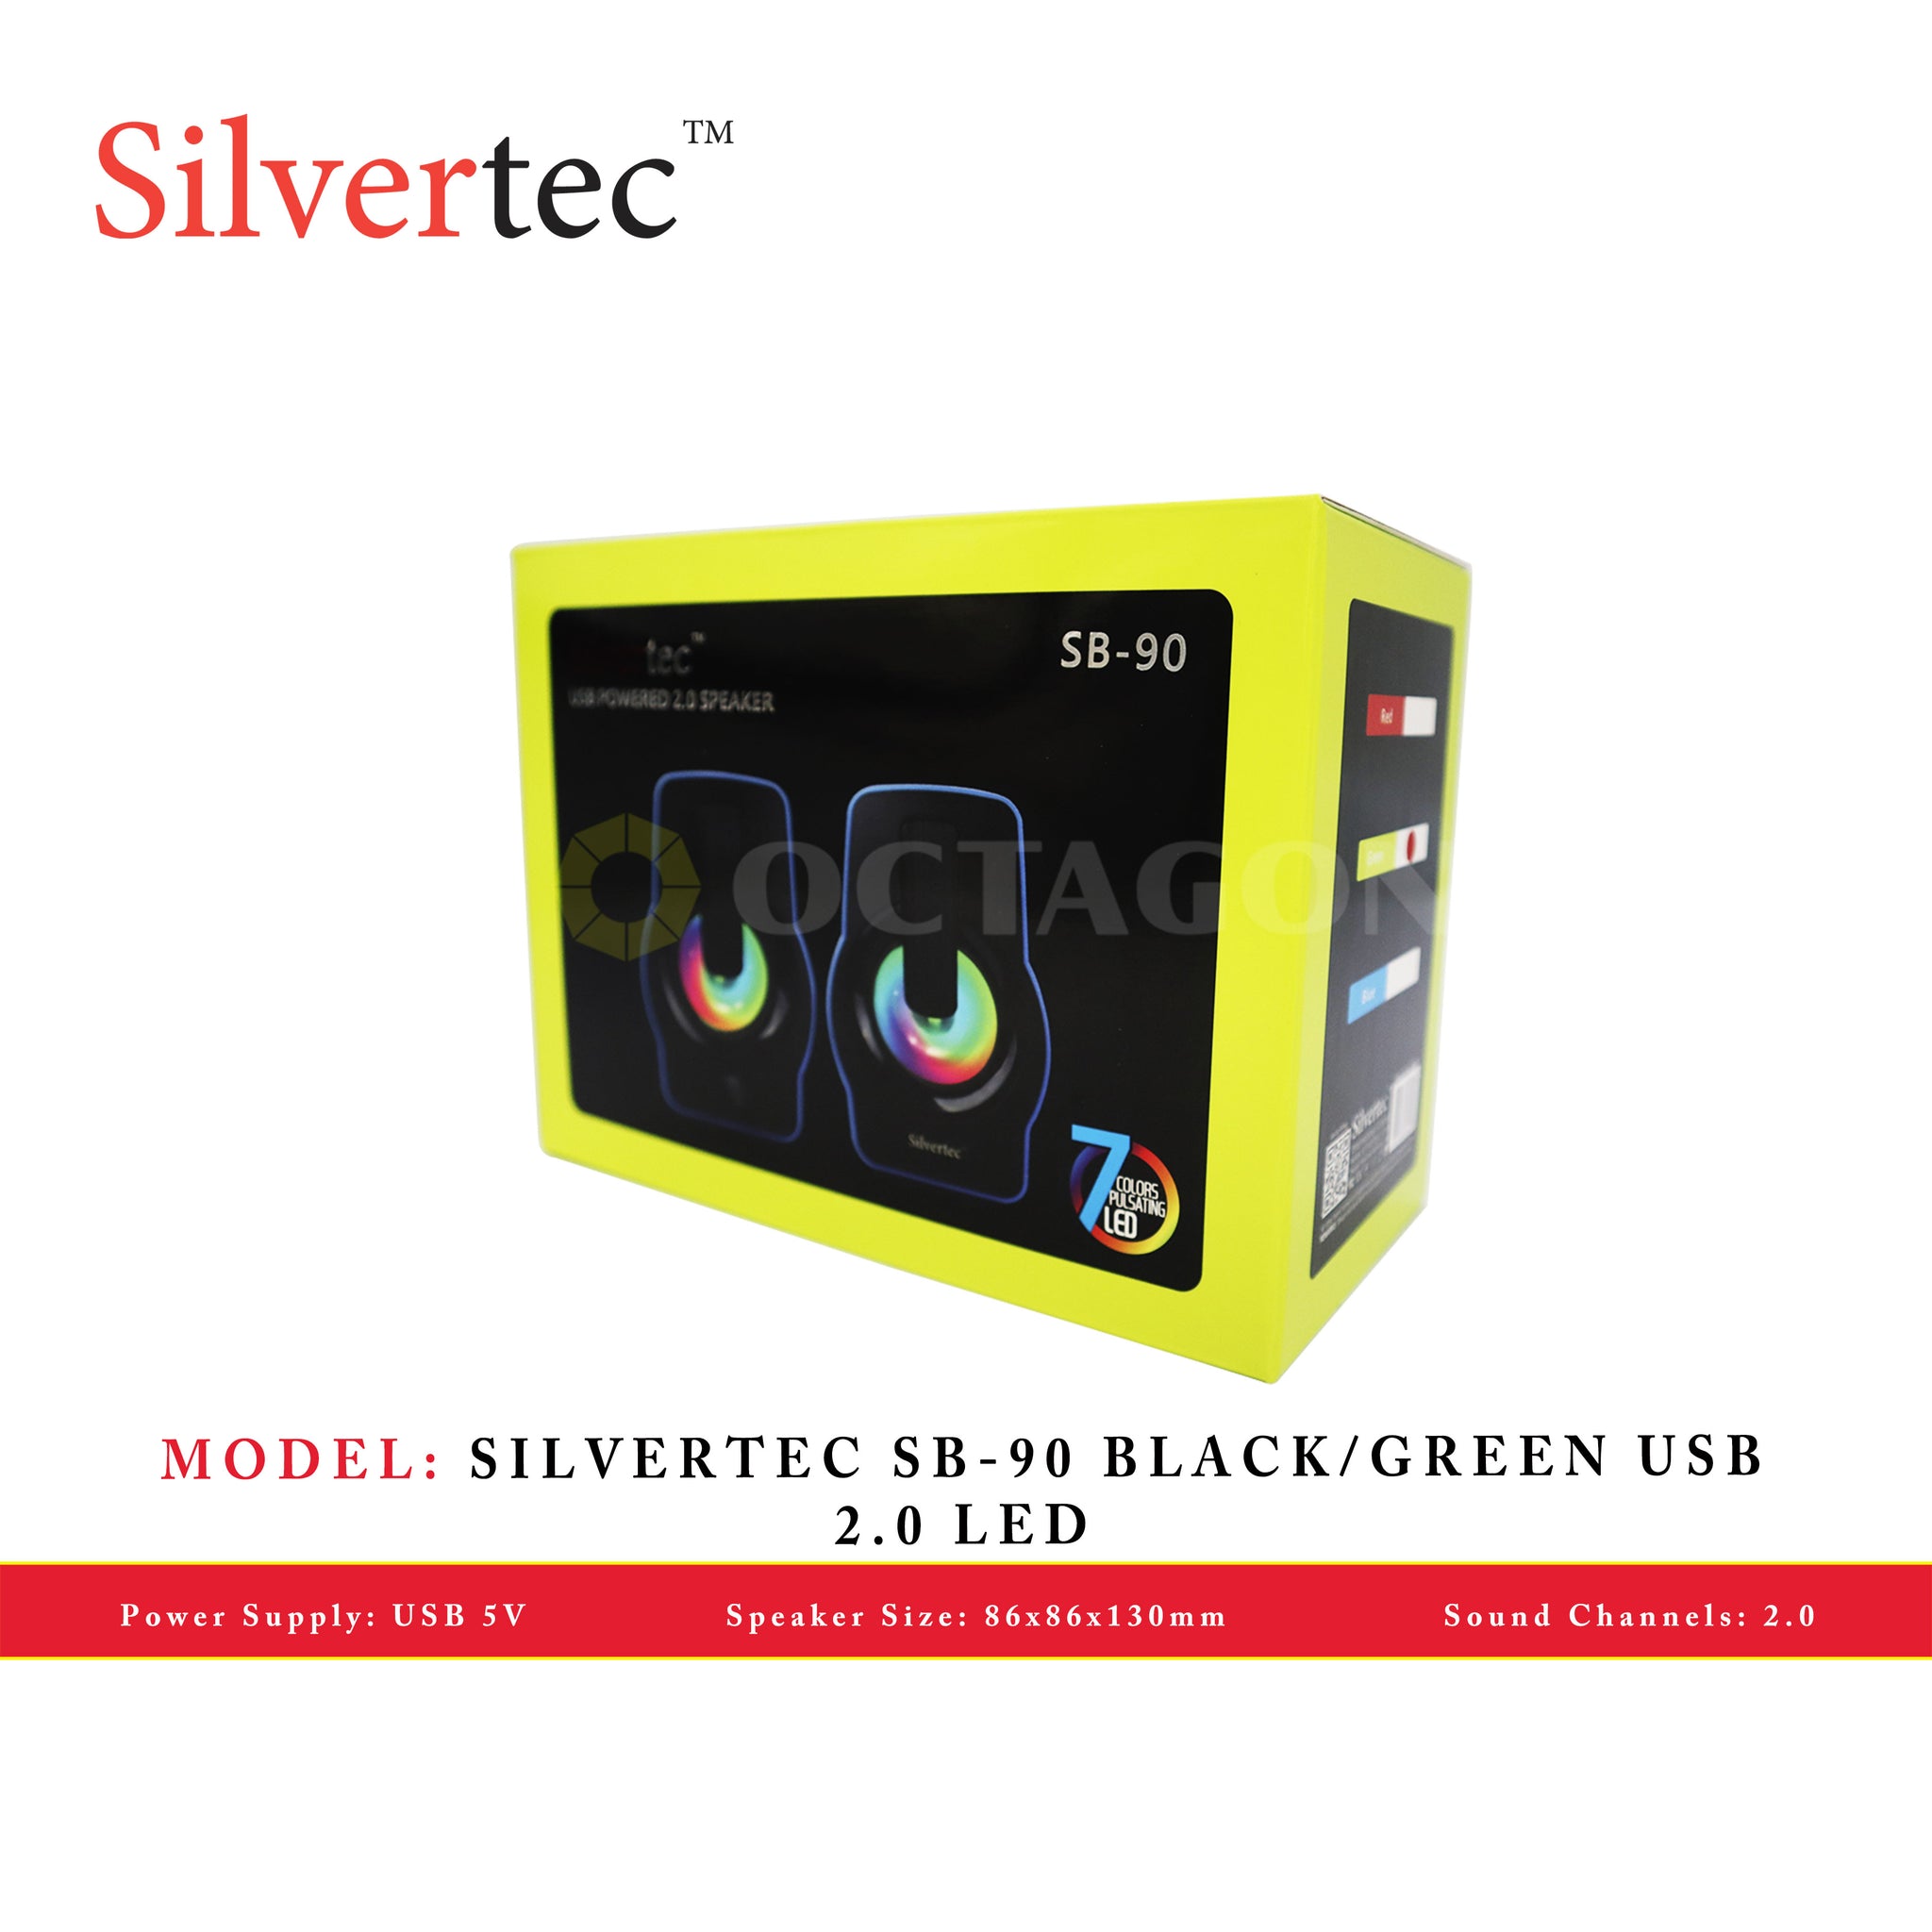 SILVERTEC SB-90 BLACK/GREEN USB 2.0 LED